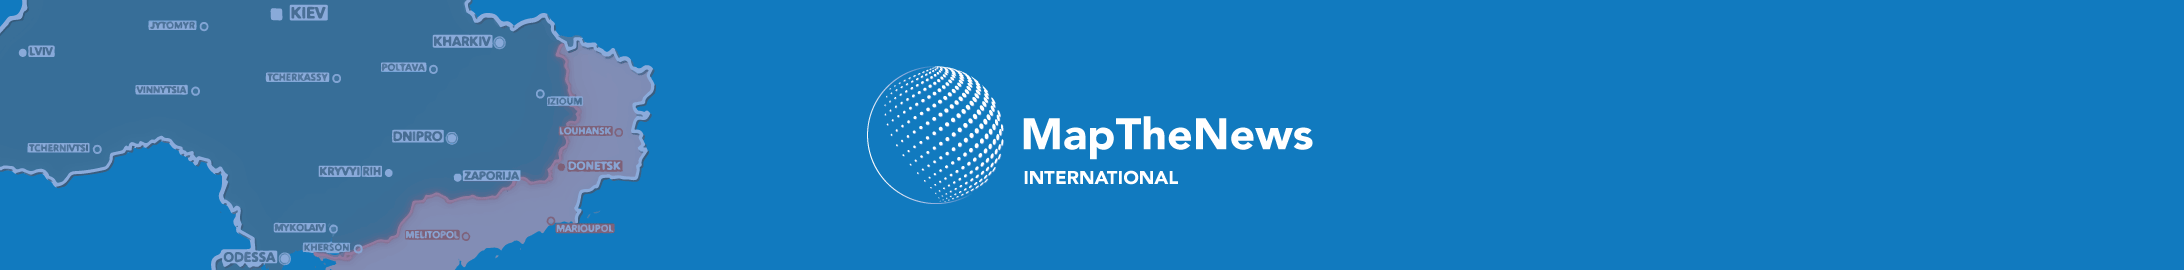 MapTheNews International